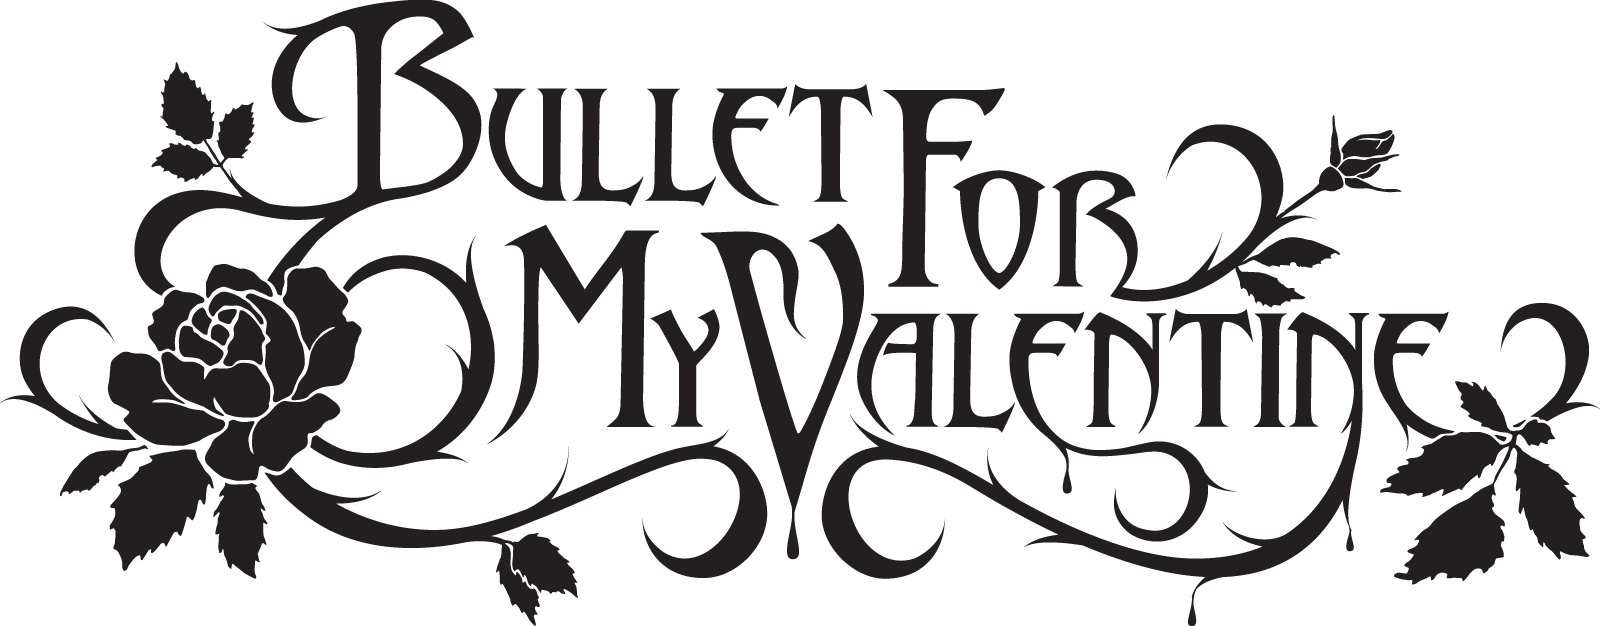 Bullet For My Valentine_logo